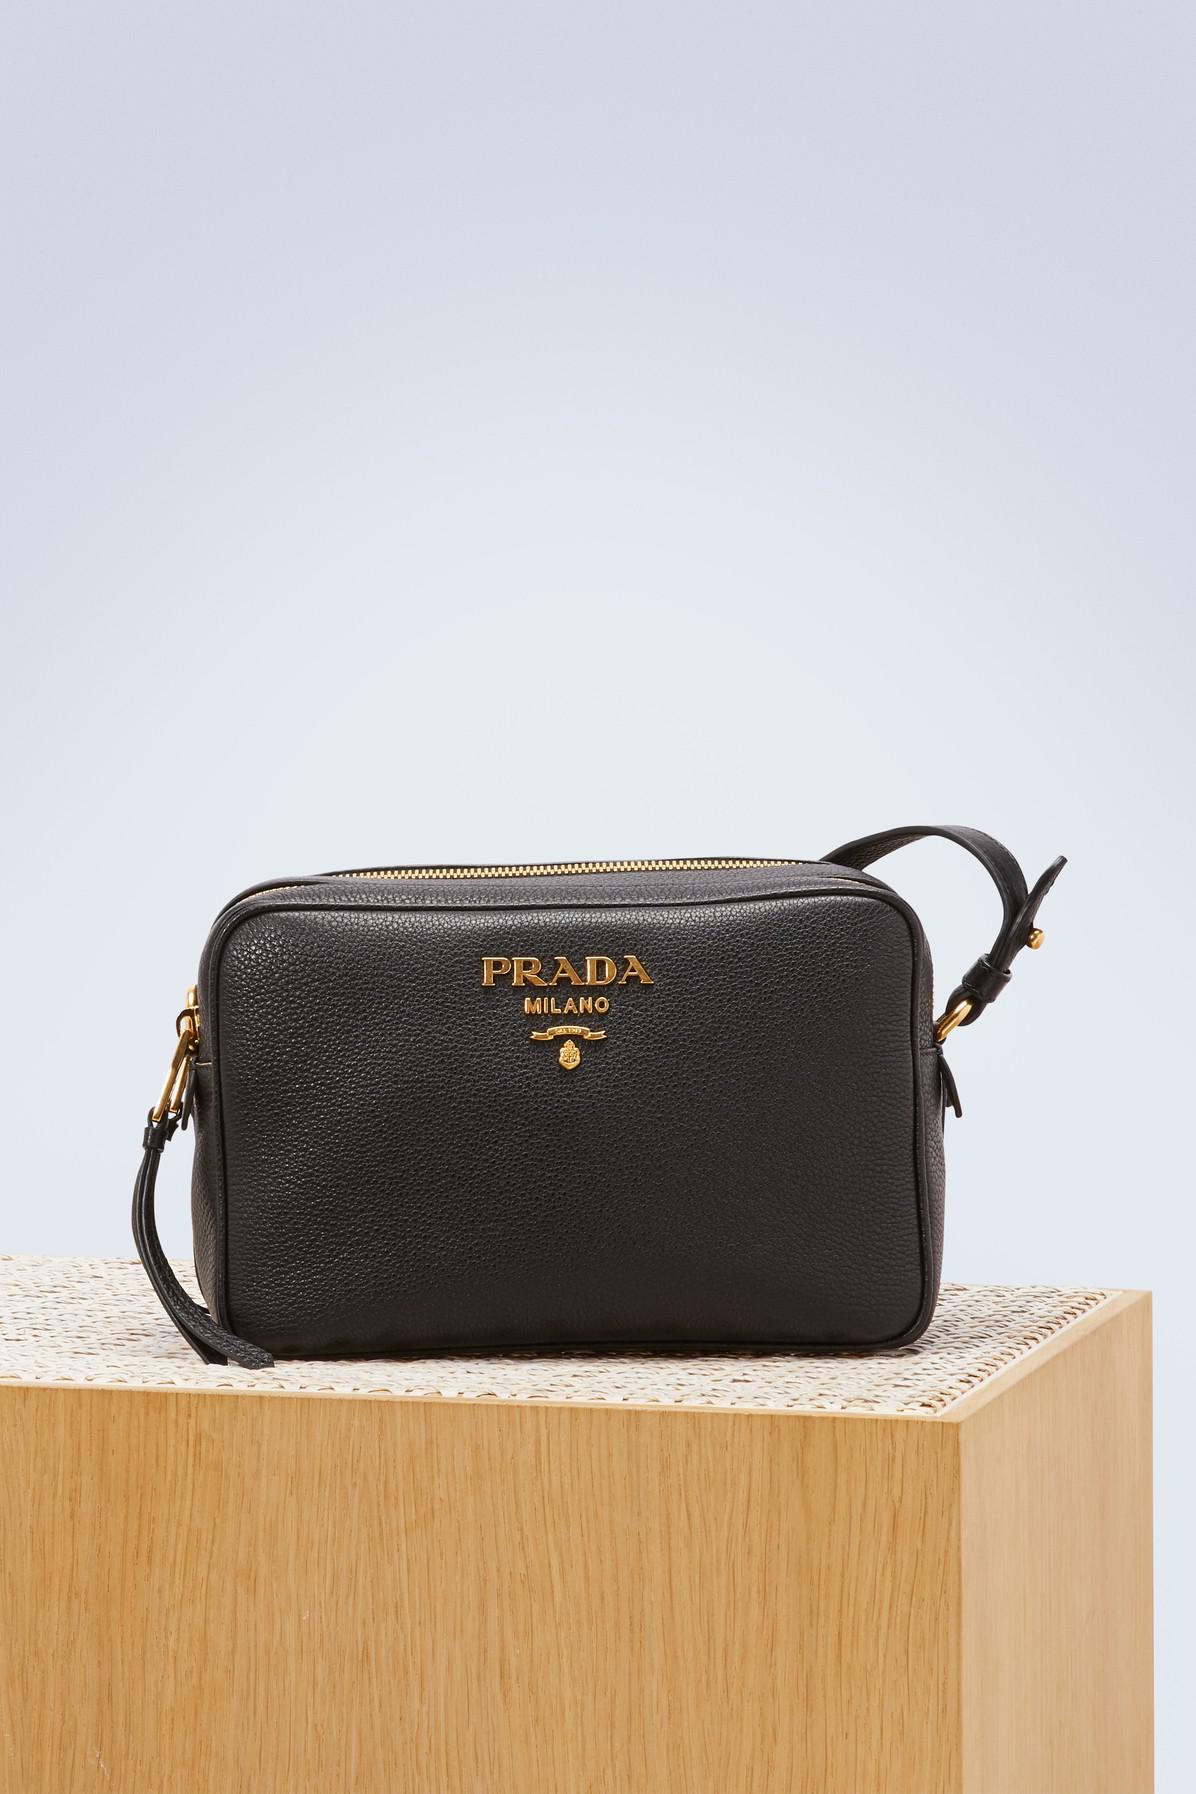 Prada Double Zip Mini Camera Bag in Black